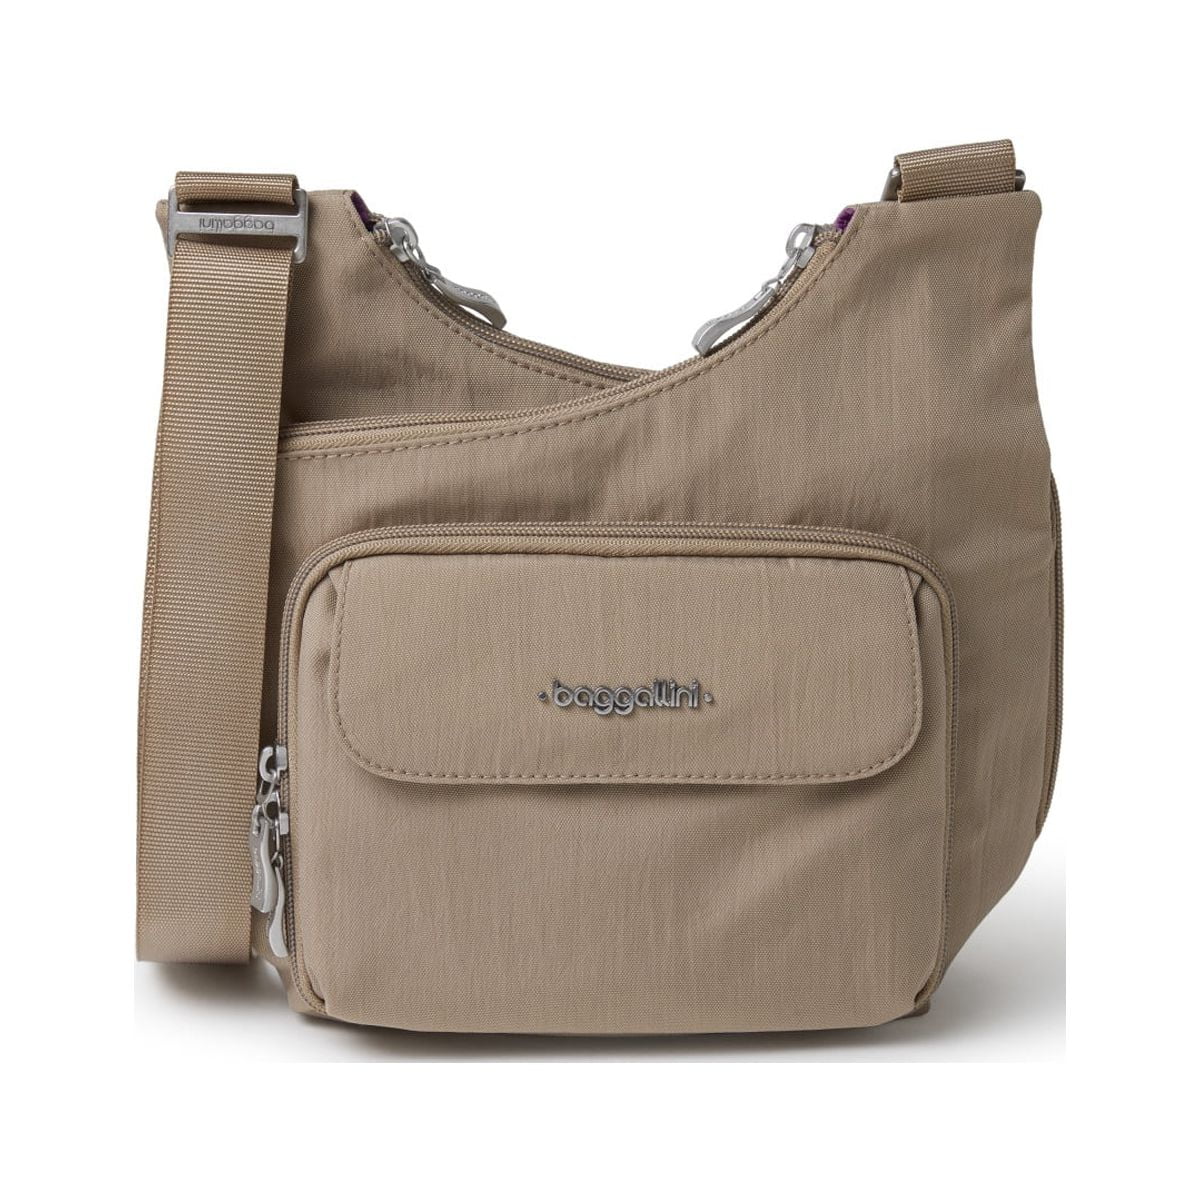 Baggallini Avenue Tote Top Handle Bag, Apple : Baggallini: Amazon.com.au:  Clothing, Shoes & Accessories